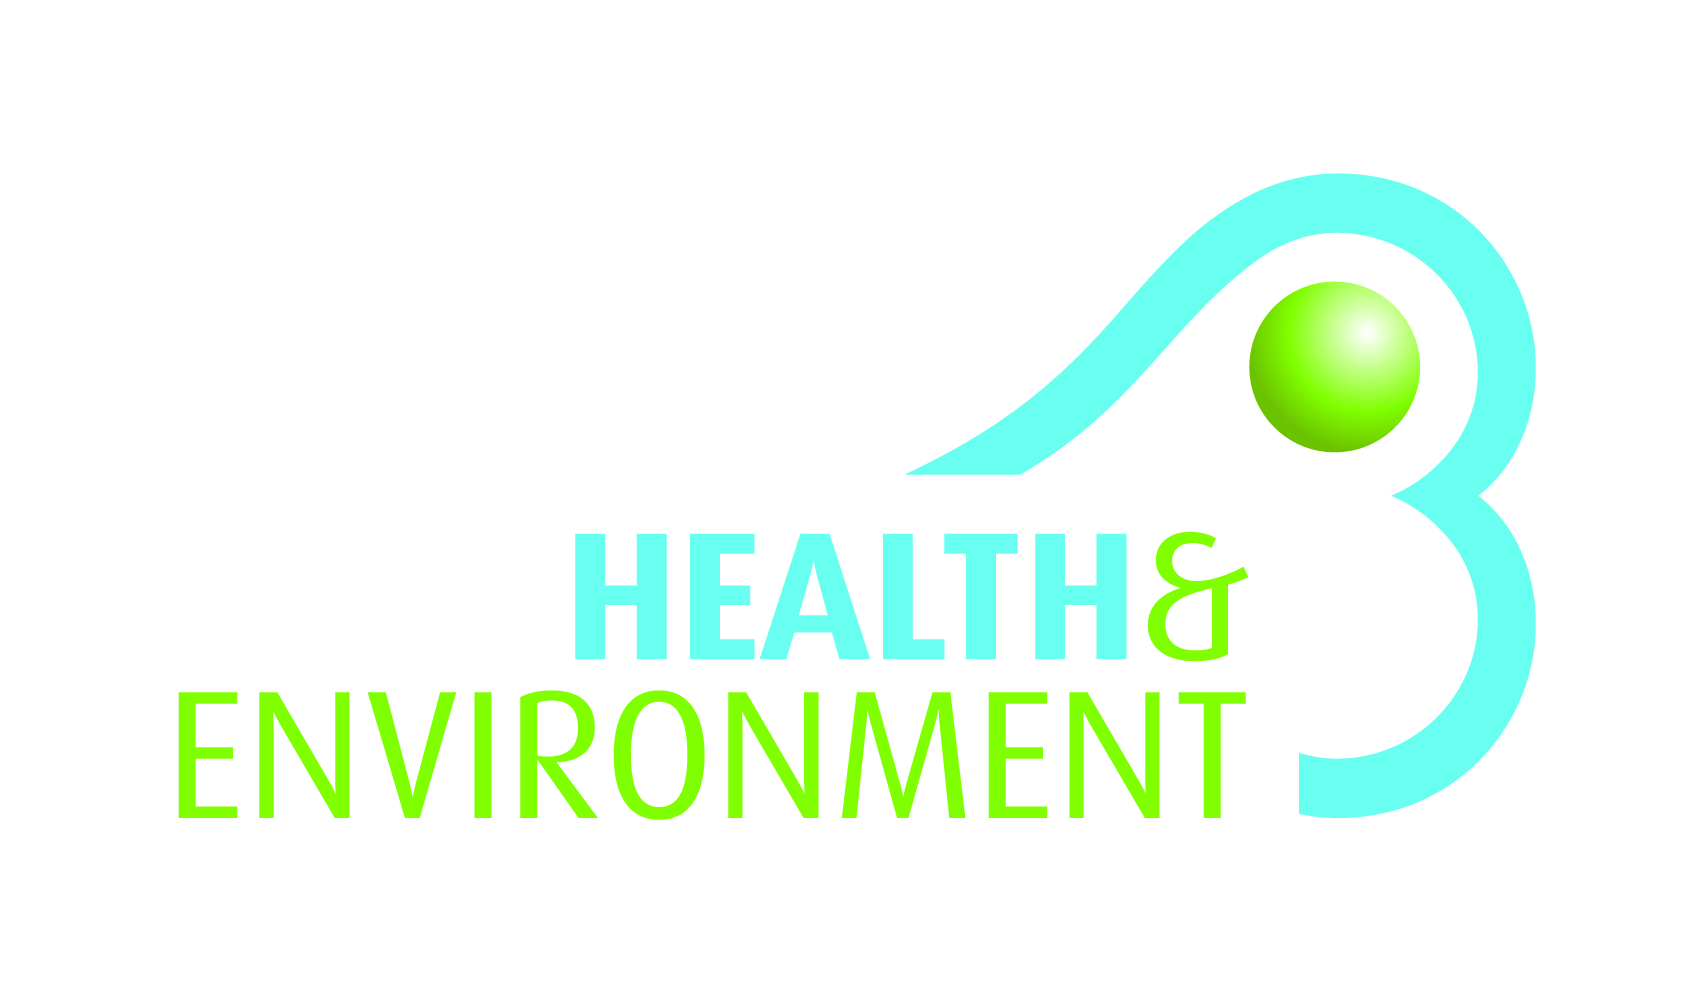 Health & Environment logo 